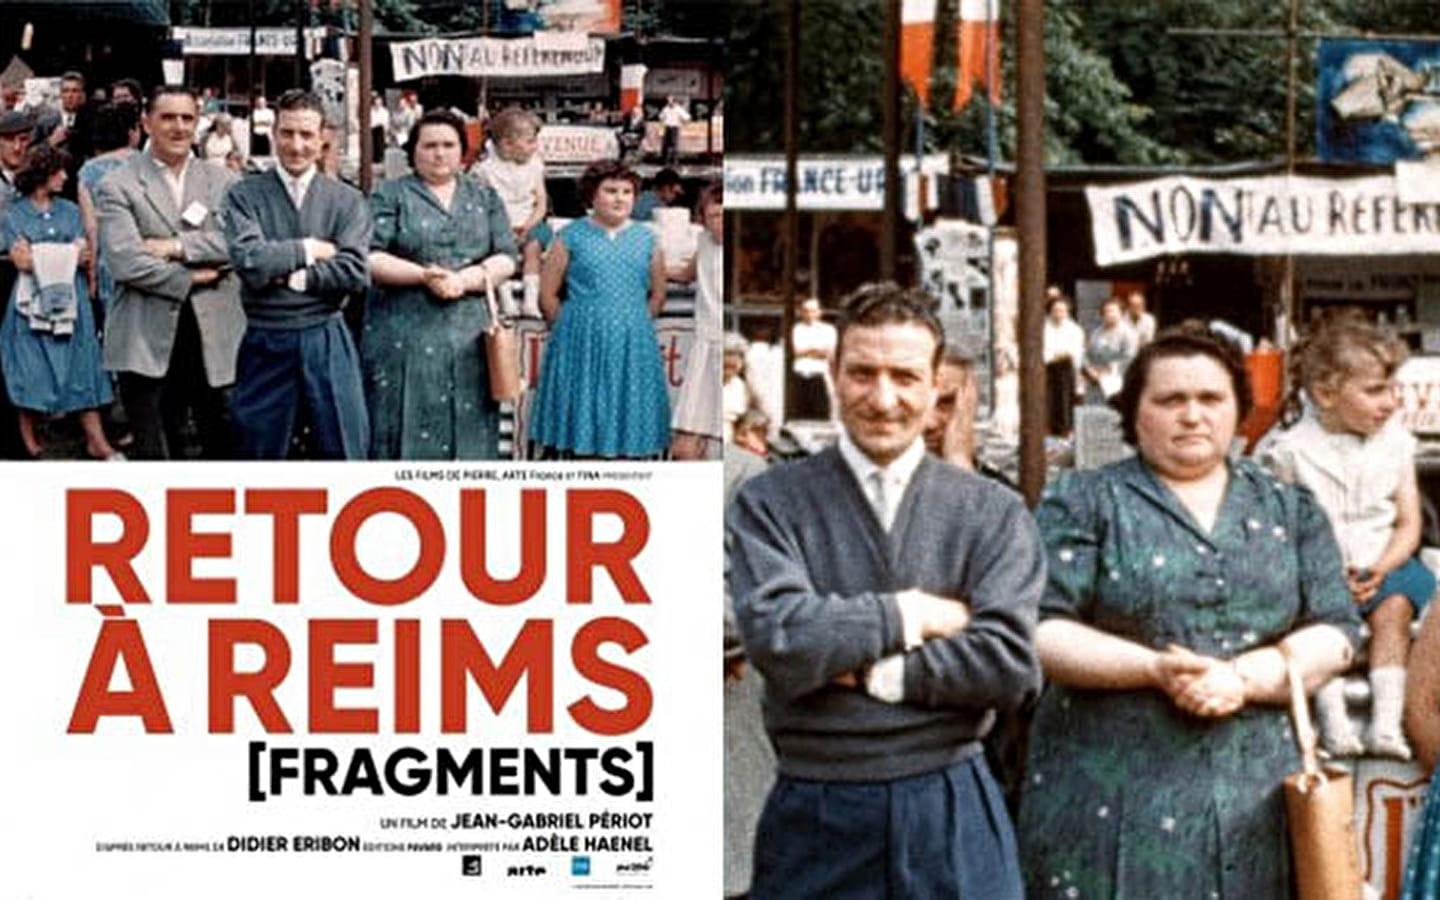 Screening of the film: retour à Reims (Fragments)